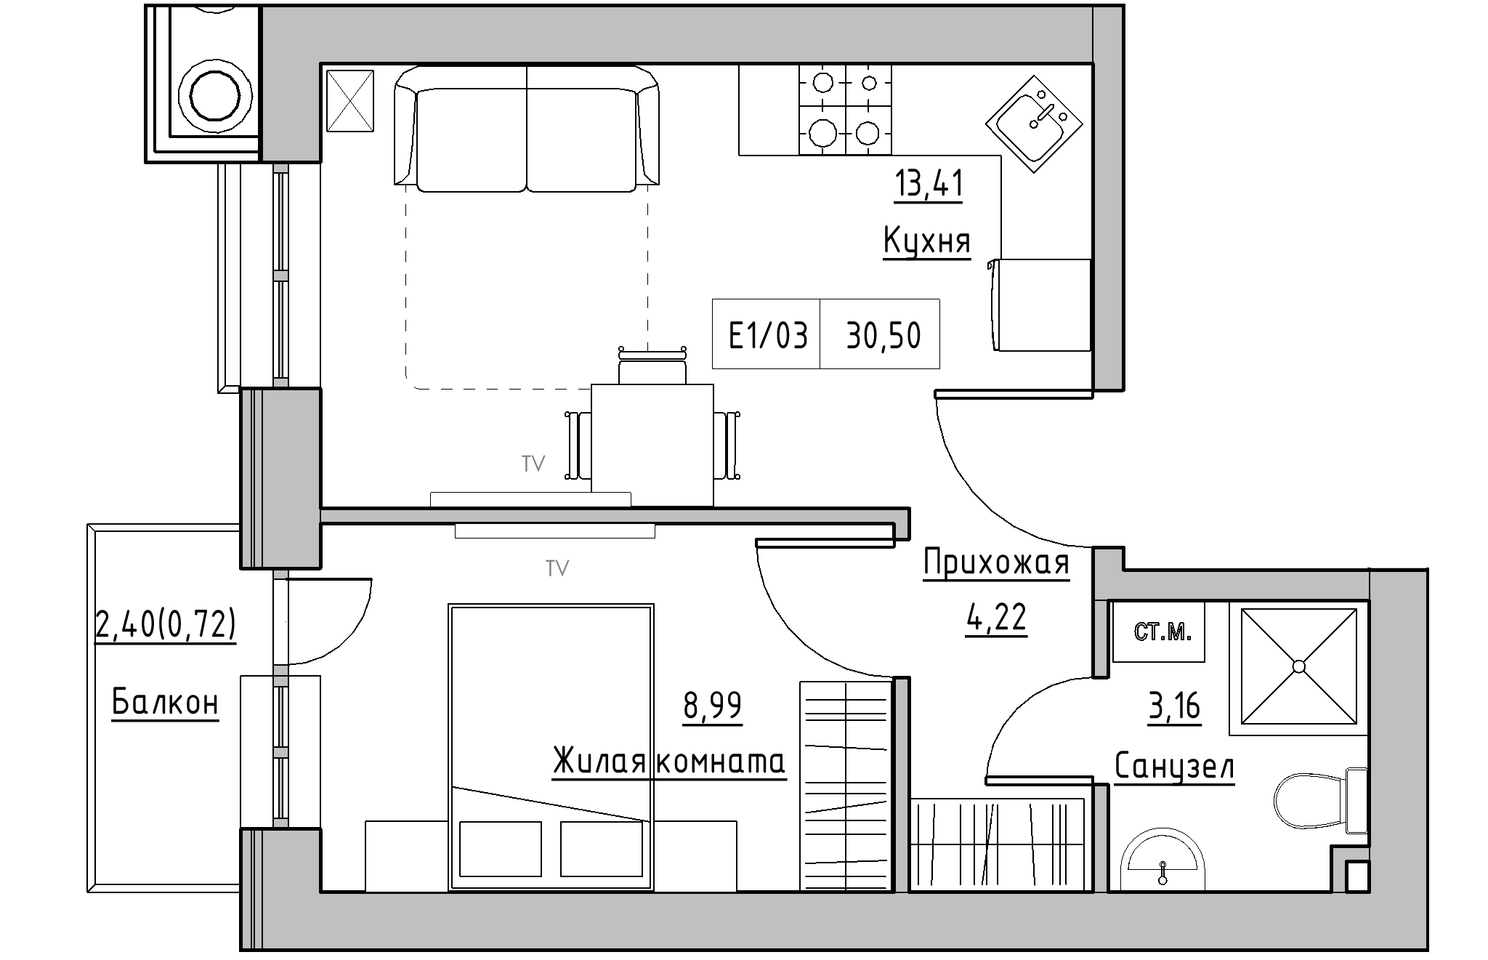 Planning 1-rm flats area 30.5m2, KS-010-05/0015.